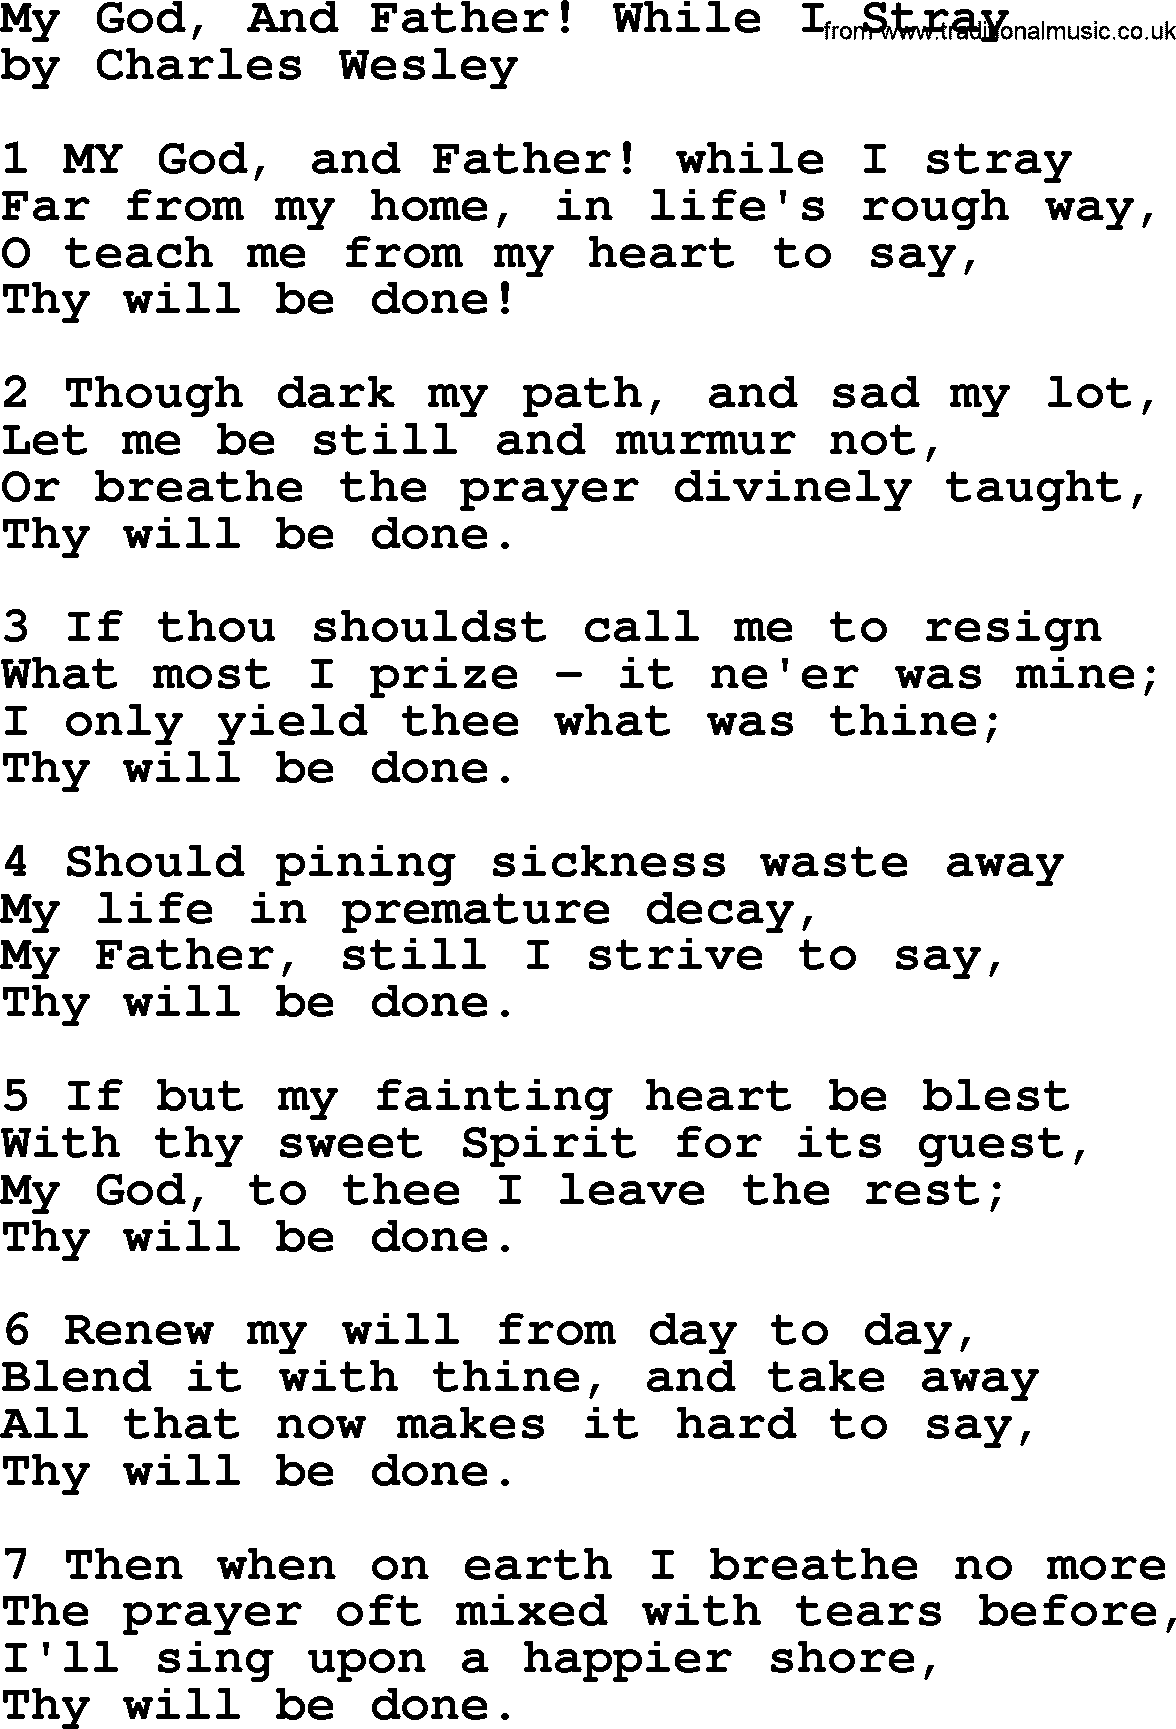 Charles Wesley hymn: My God, And Father! While I Stray, lyrics